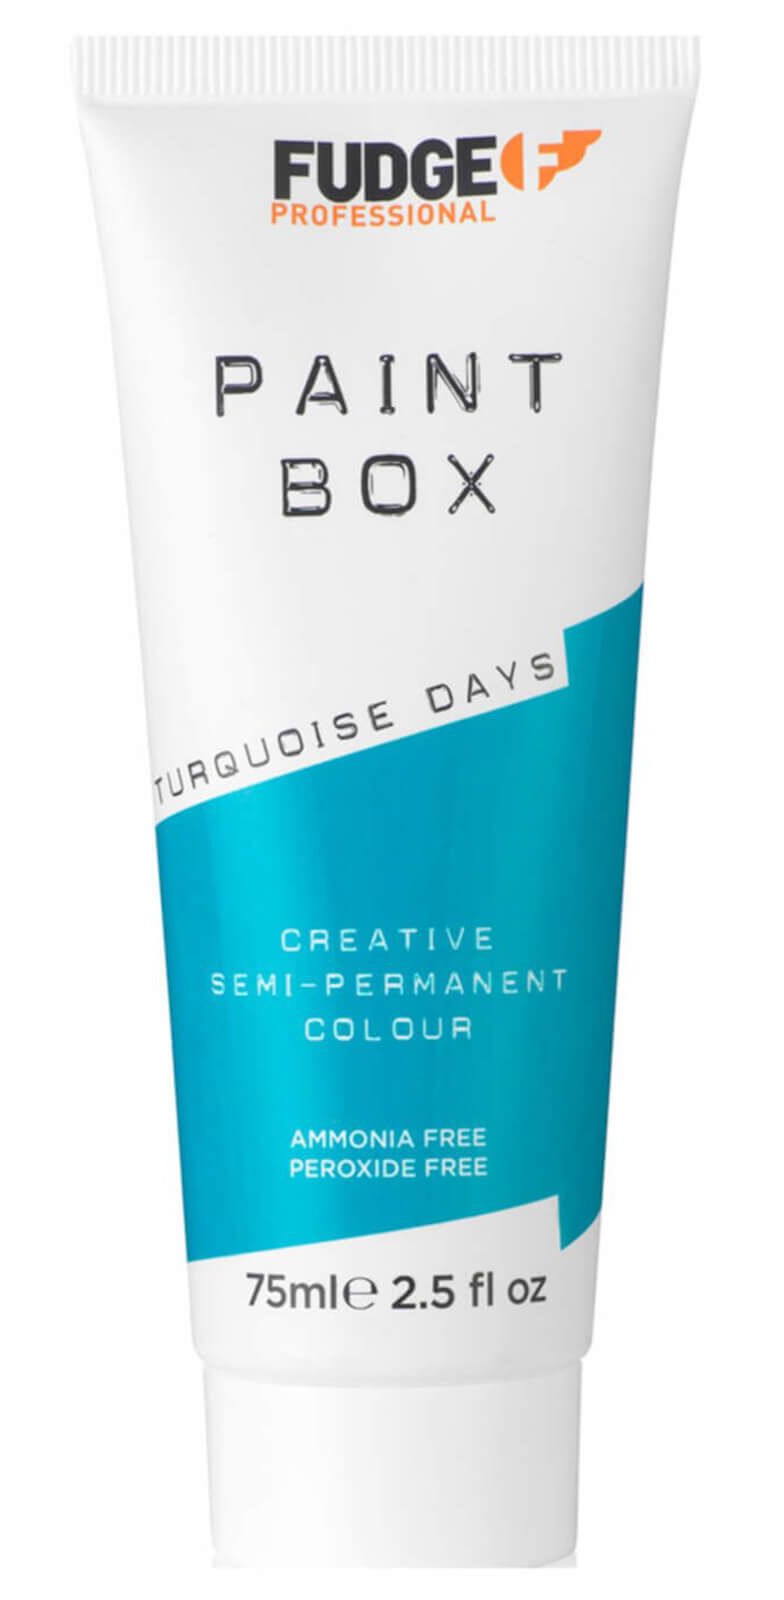 Fudge Professional Paint Box Turquoise Days